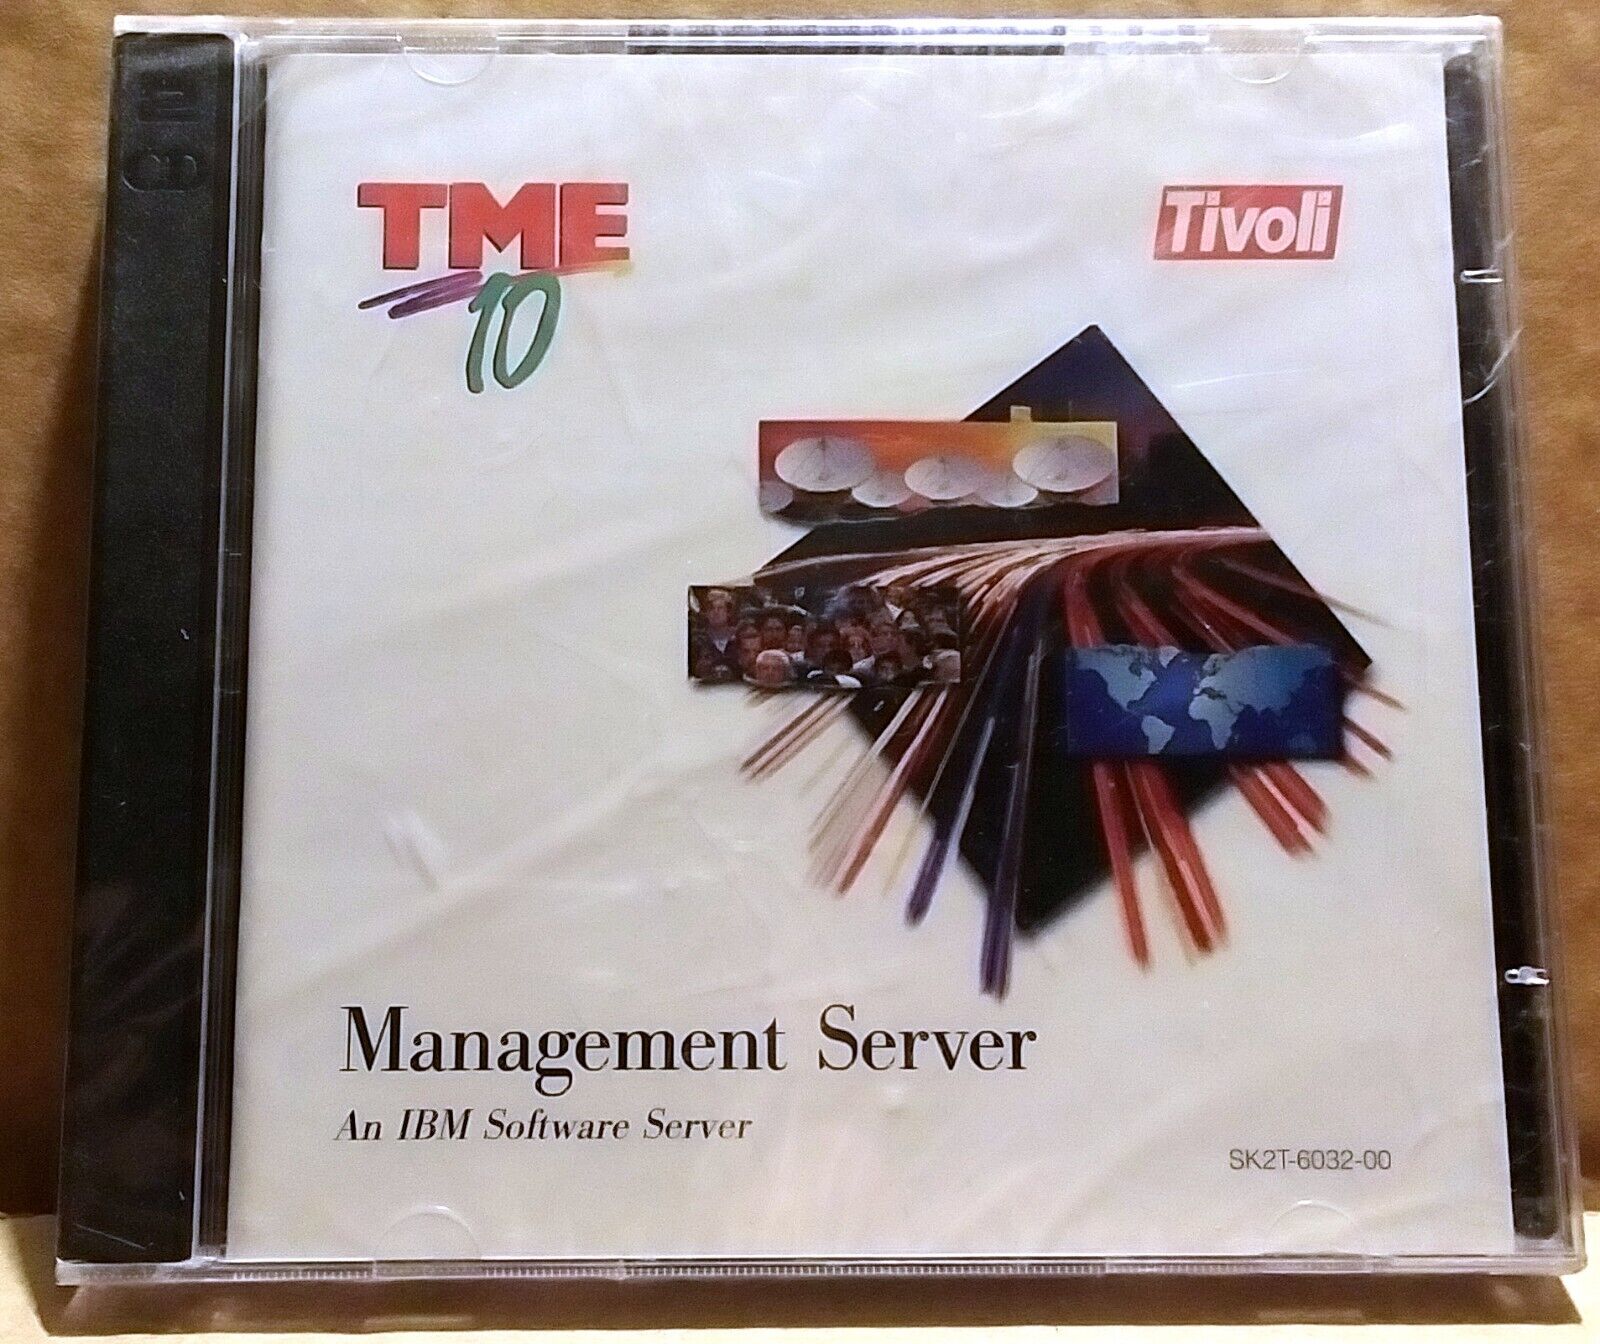 NEW - 1996 TIVOLI TIME 10 IBM MANAGEMENT SOFTWARE SERVER 2 CD SK2T-6032-00 USA